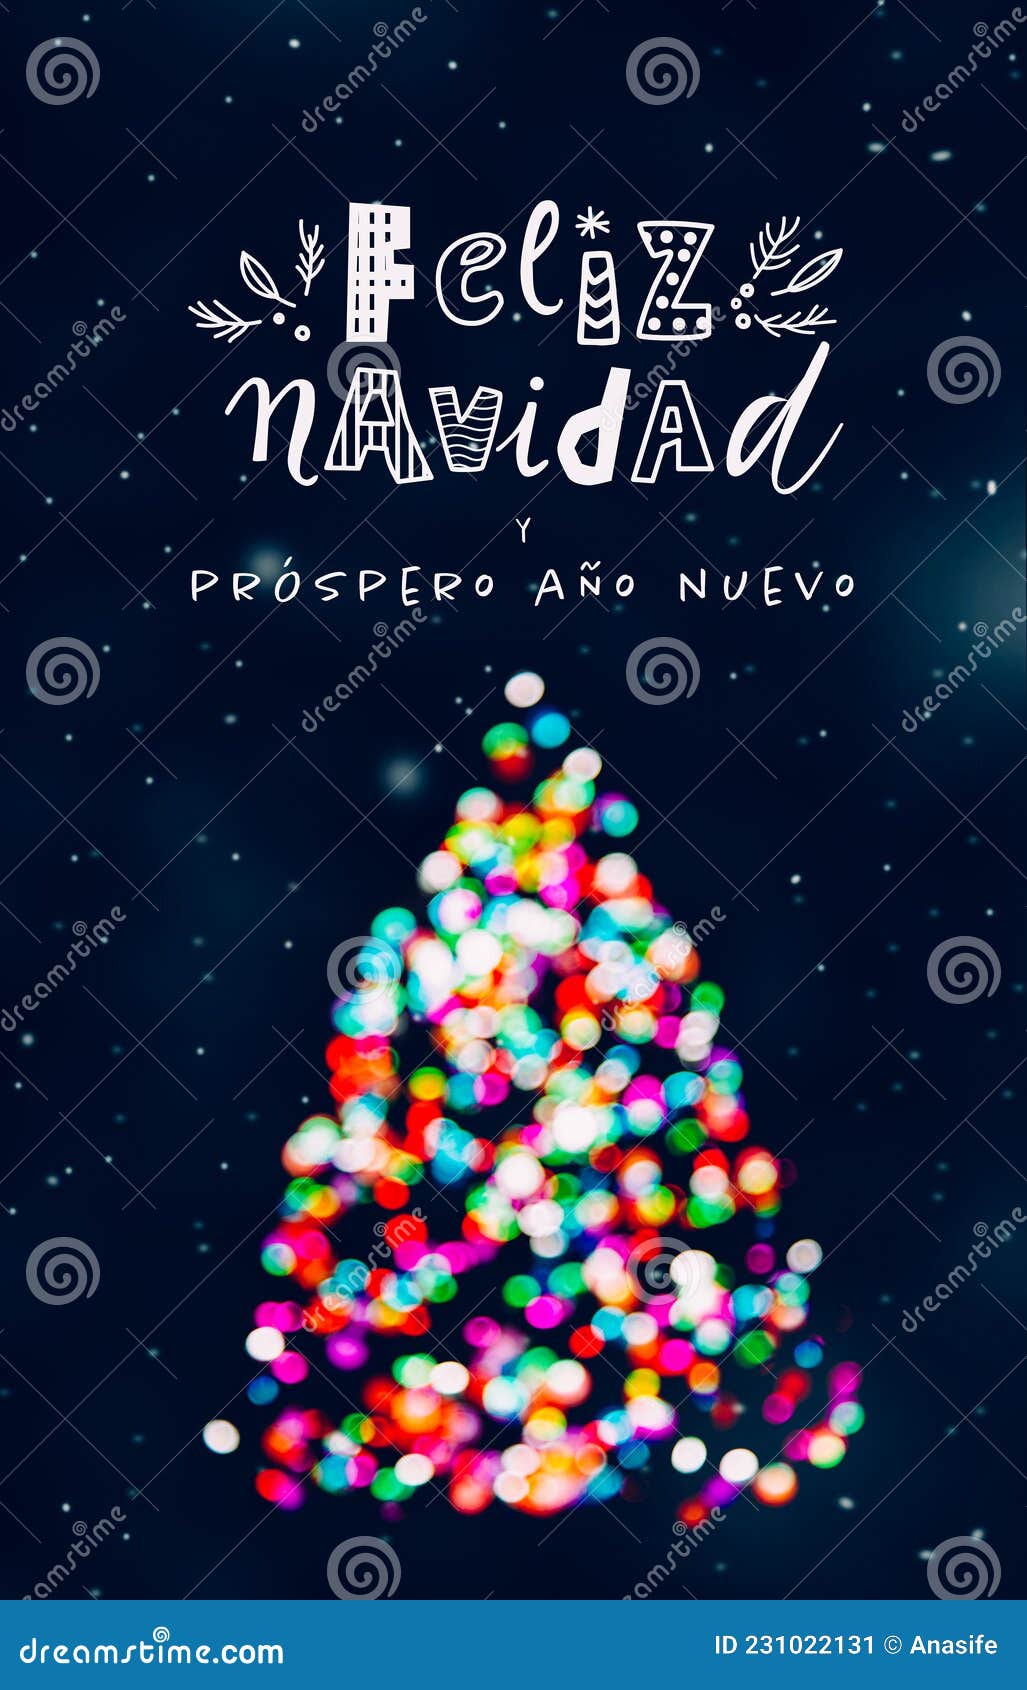 feliz navidad greeting card with an abstract tree made of colorful christmas lights